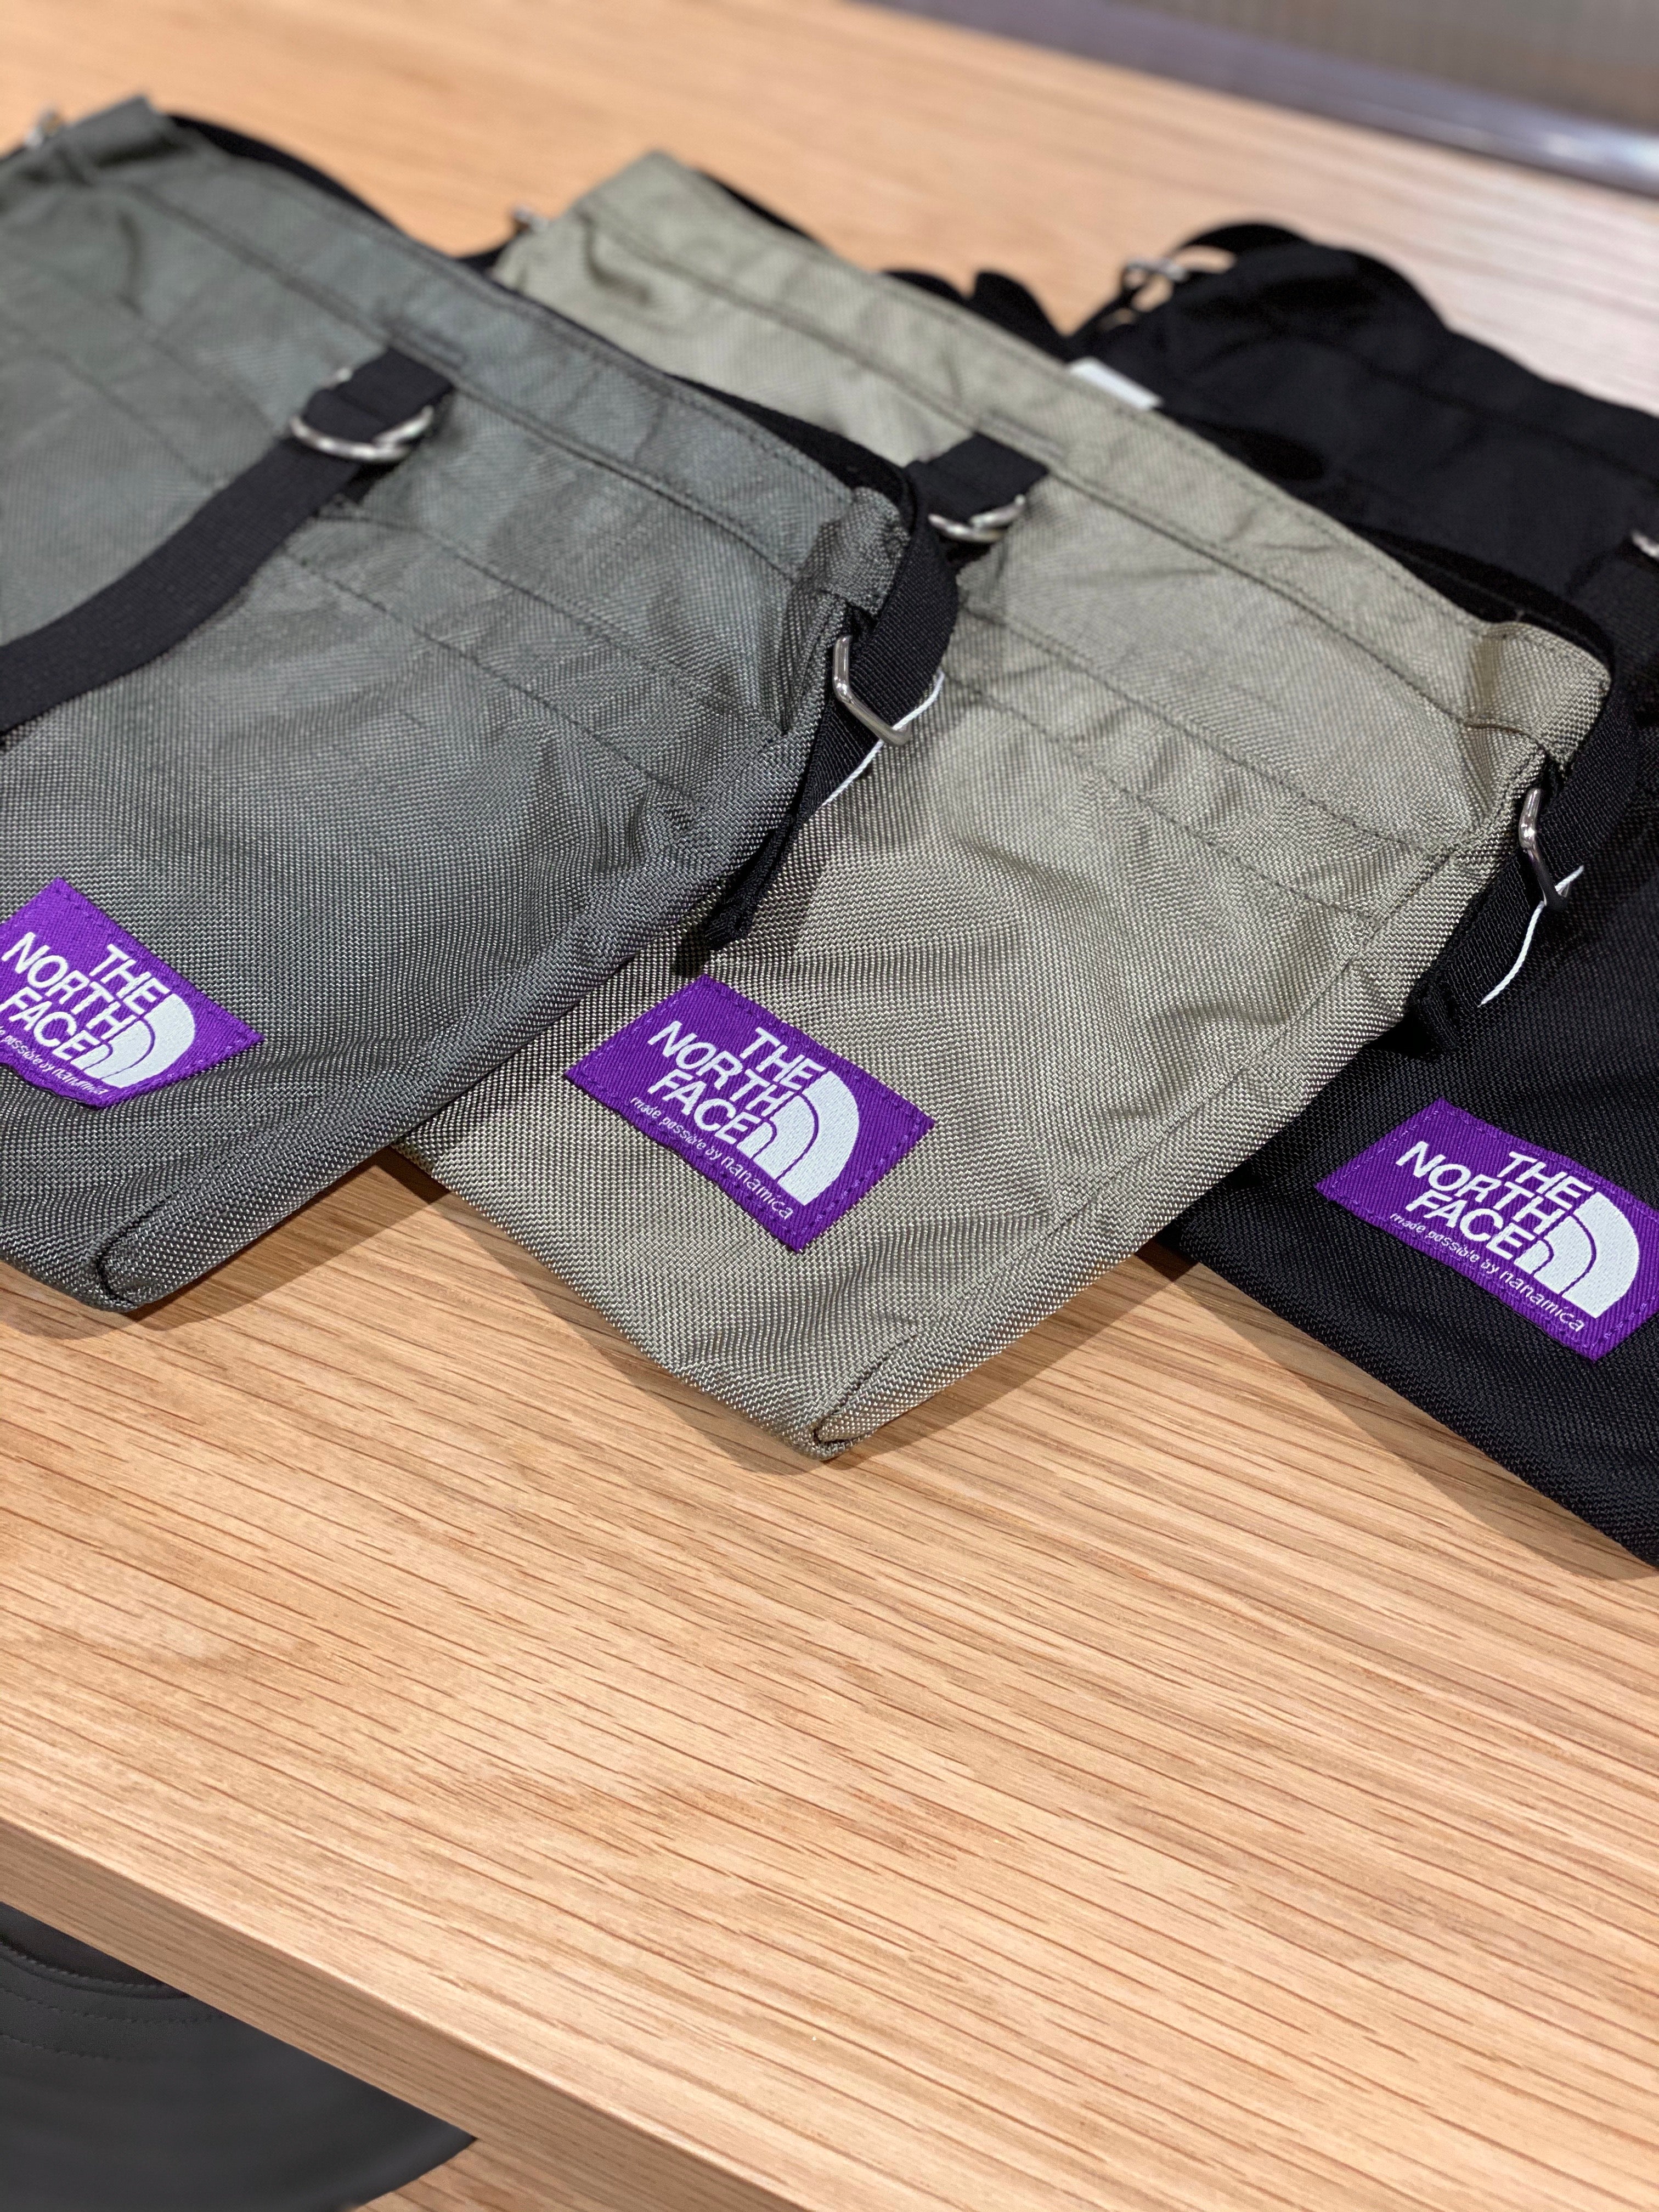 Small Shoulder Bag, NN7757N_, Dark Beige, Sage Green, Black, $58, The North Face Purple Label